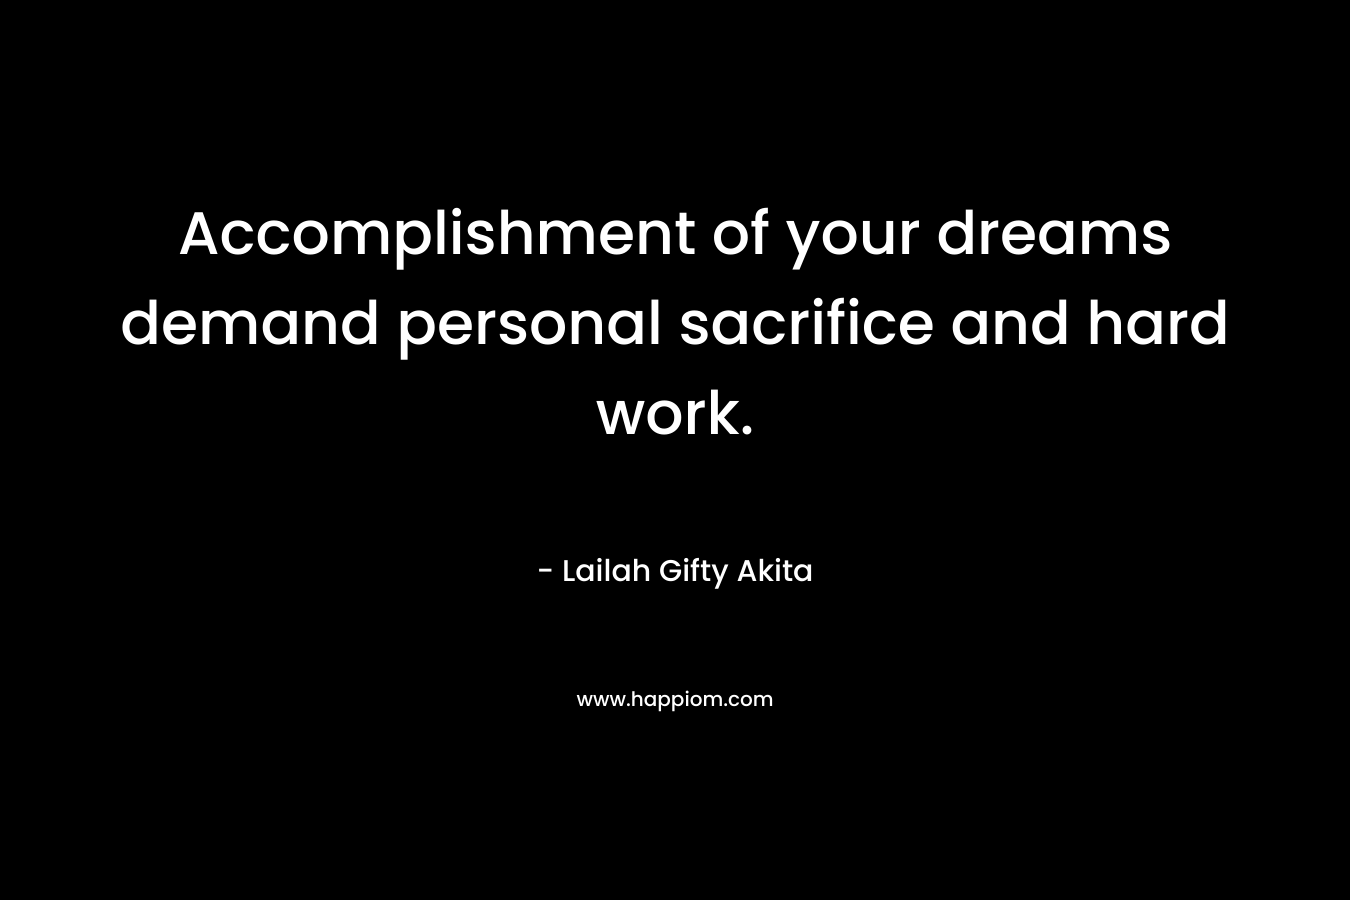 Accomplishment of your dreams demand personal sacrifice and hard work.